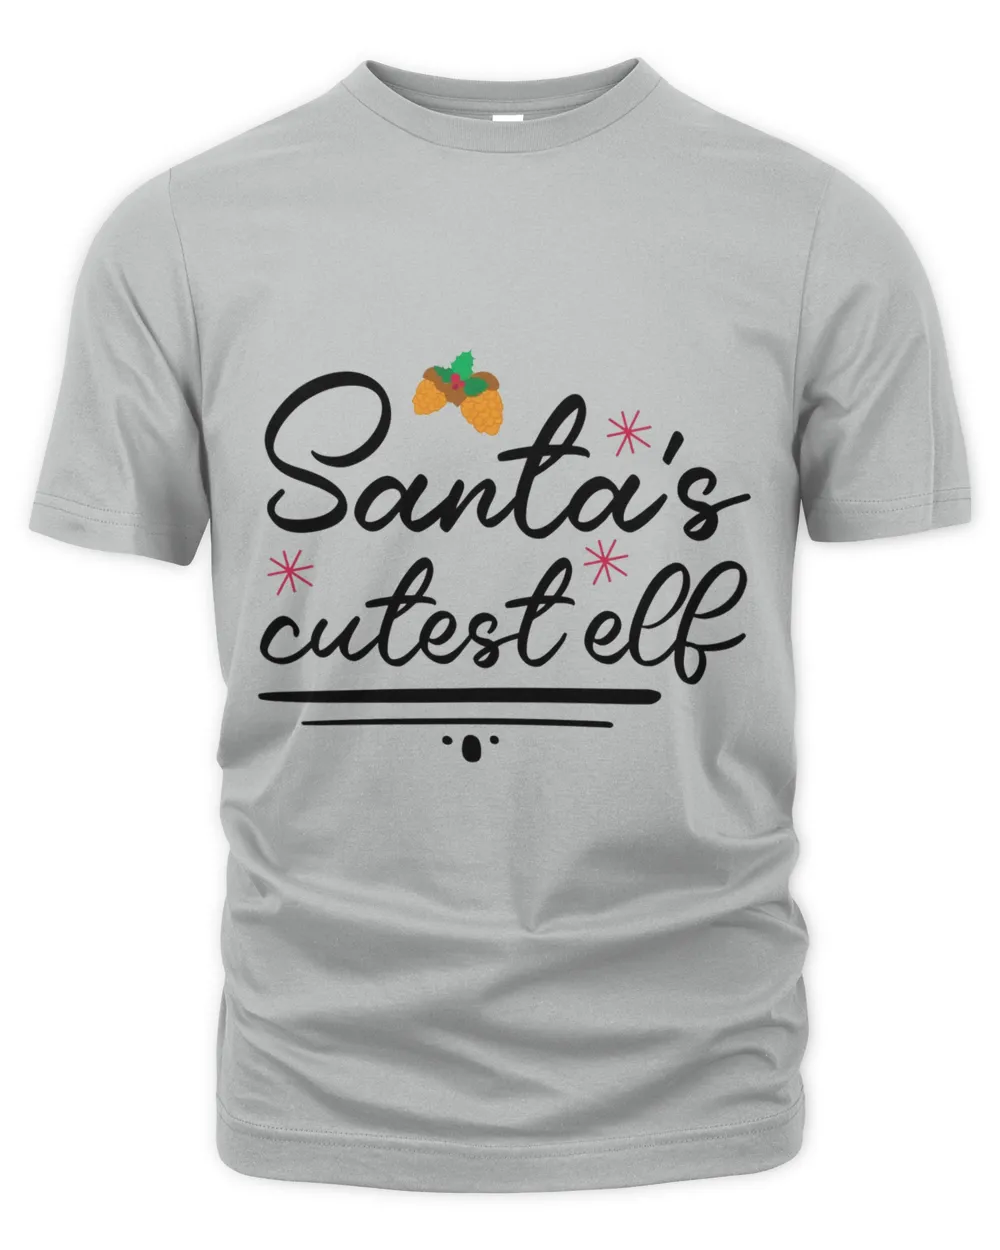 Santa's Cutest Elf, Men's & Women's Merry Christmas Shirt